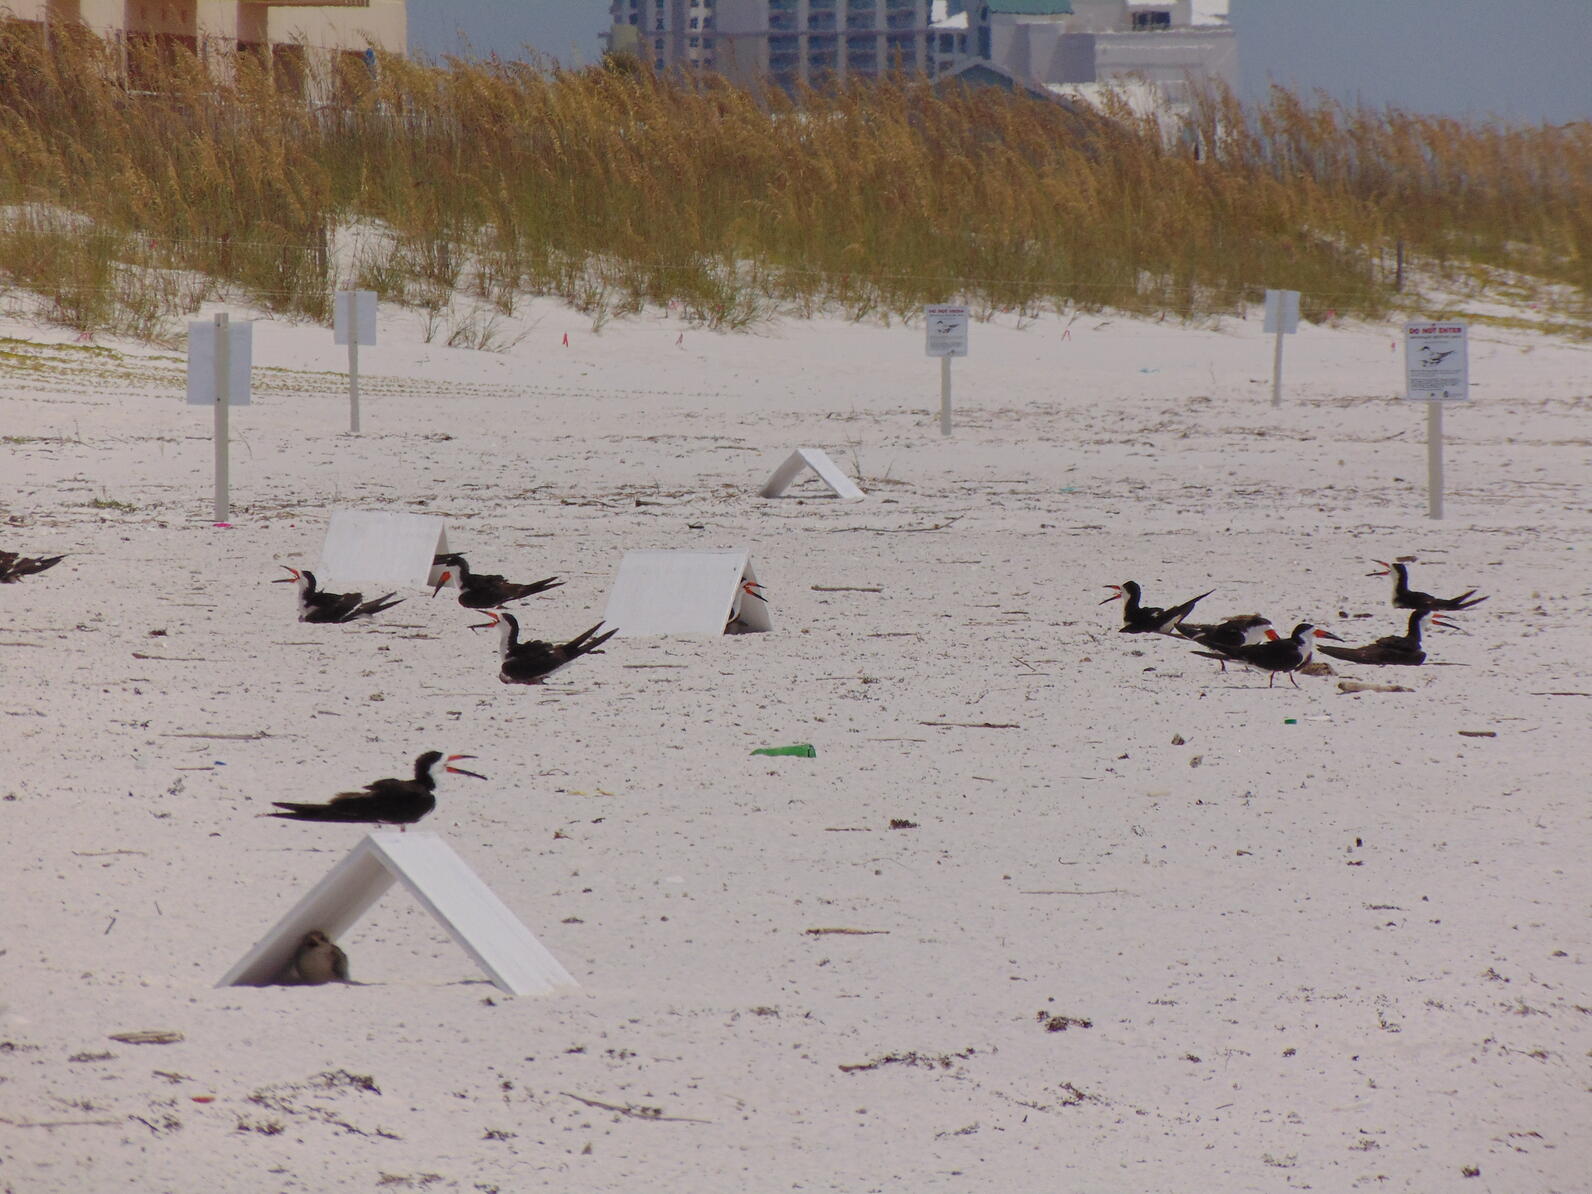 Black Skimmer chick using shelter on Pensacola Beach. Adult skimmers in the backgroundPhoto: Caroline Stahala